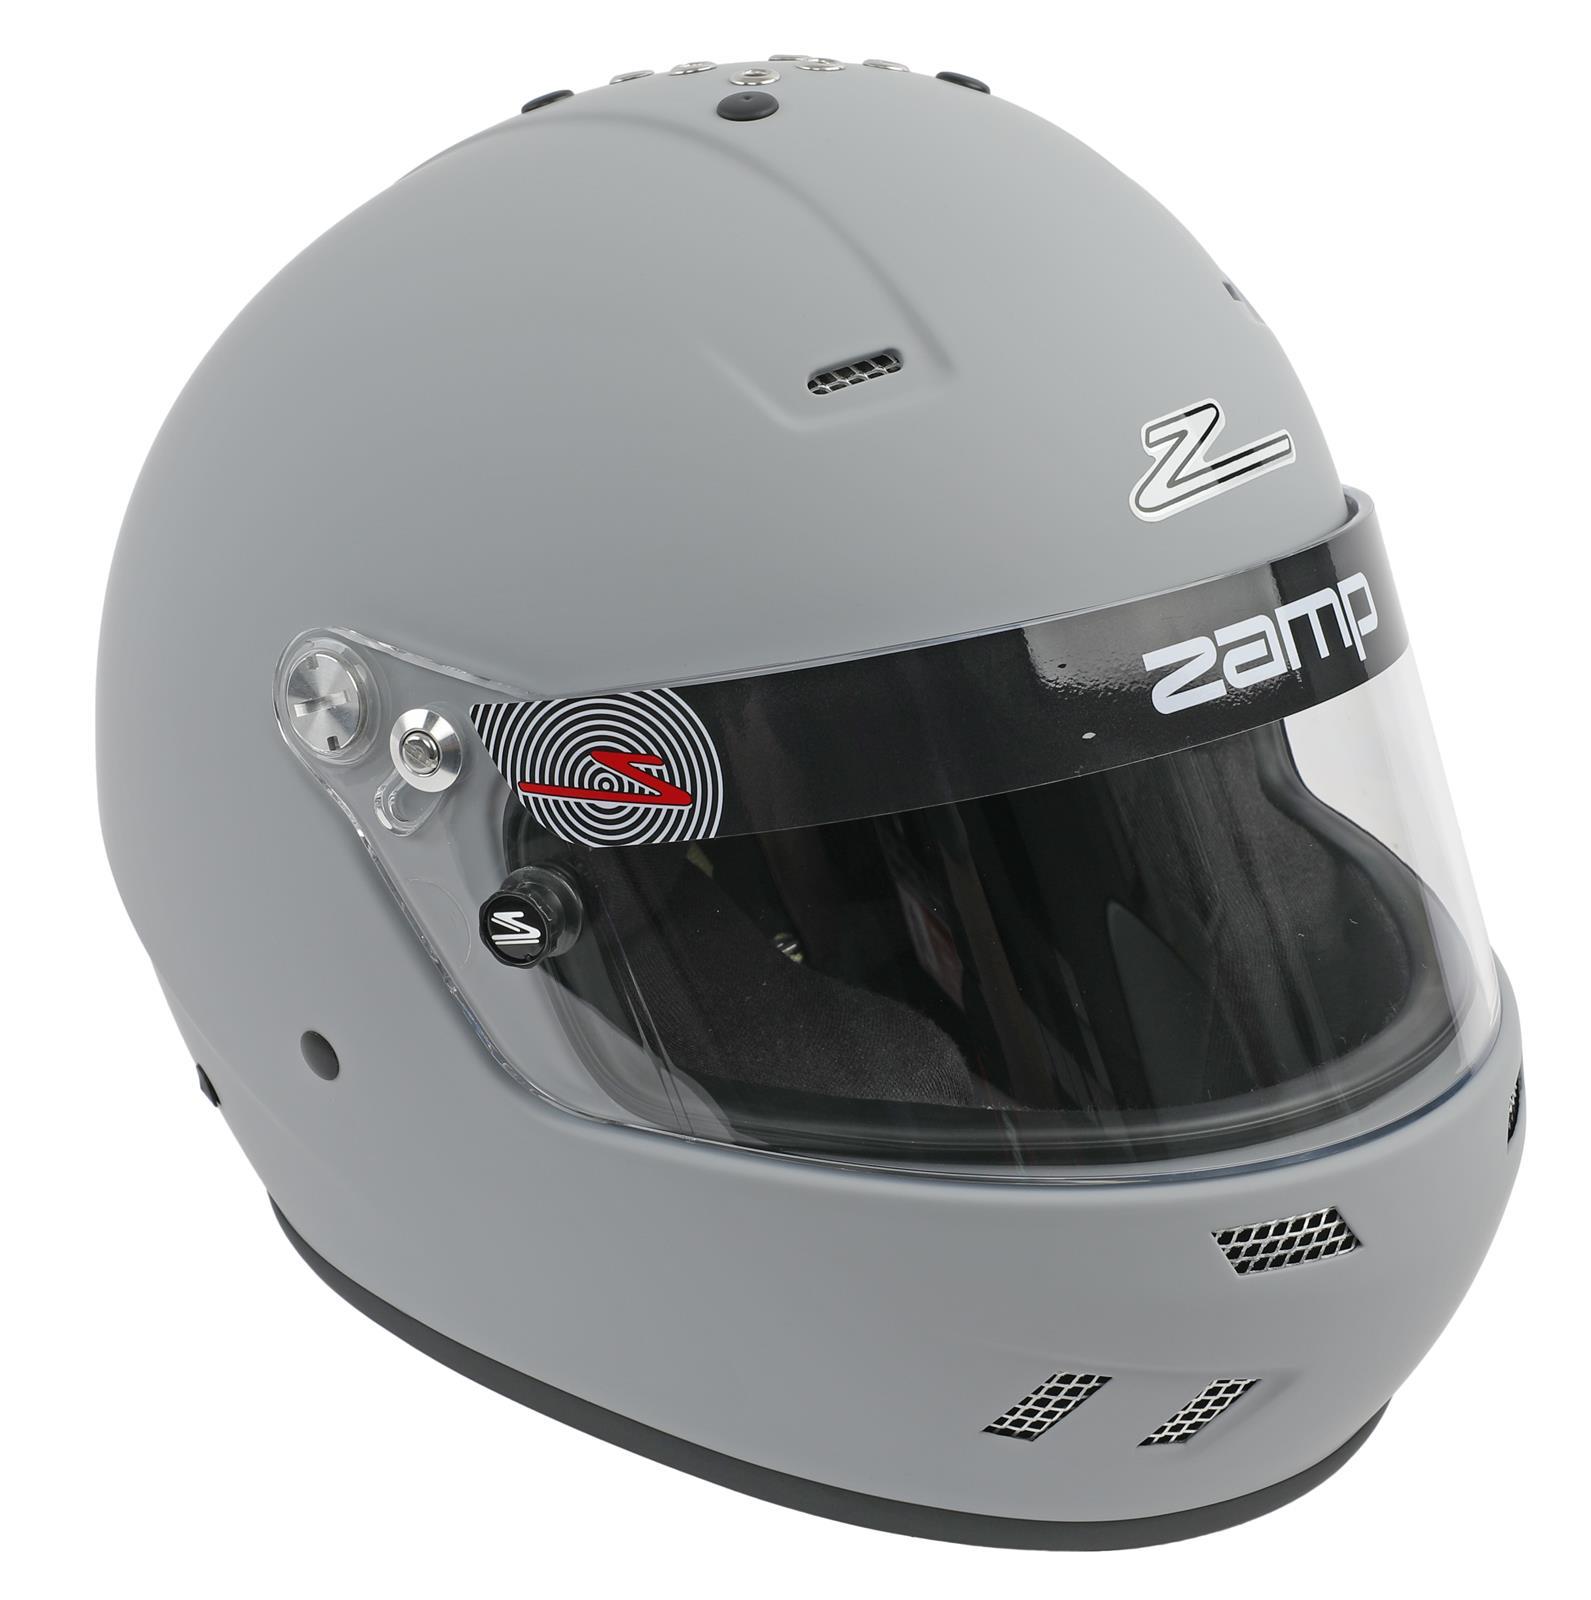 Zamp Solar Helmet RZ-59 L Matte Gray SA2020 Helmets and Accessories Helmets main image